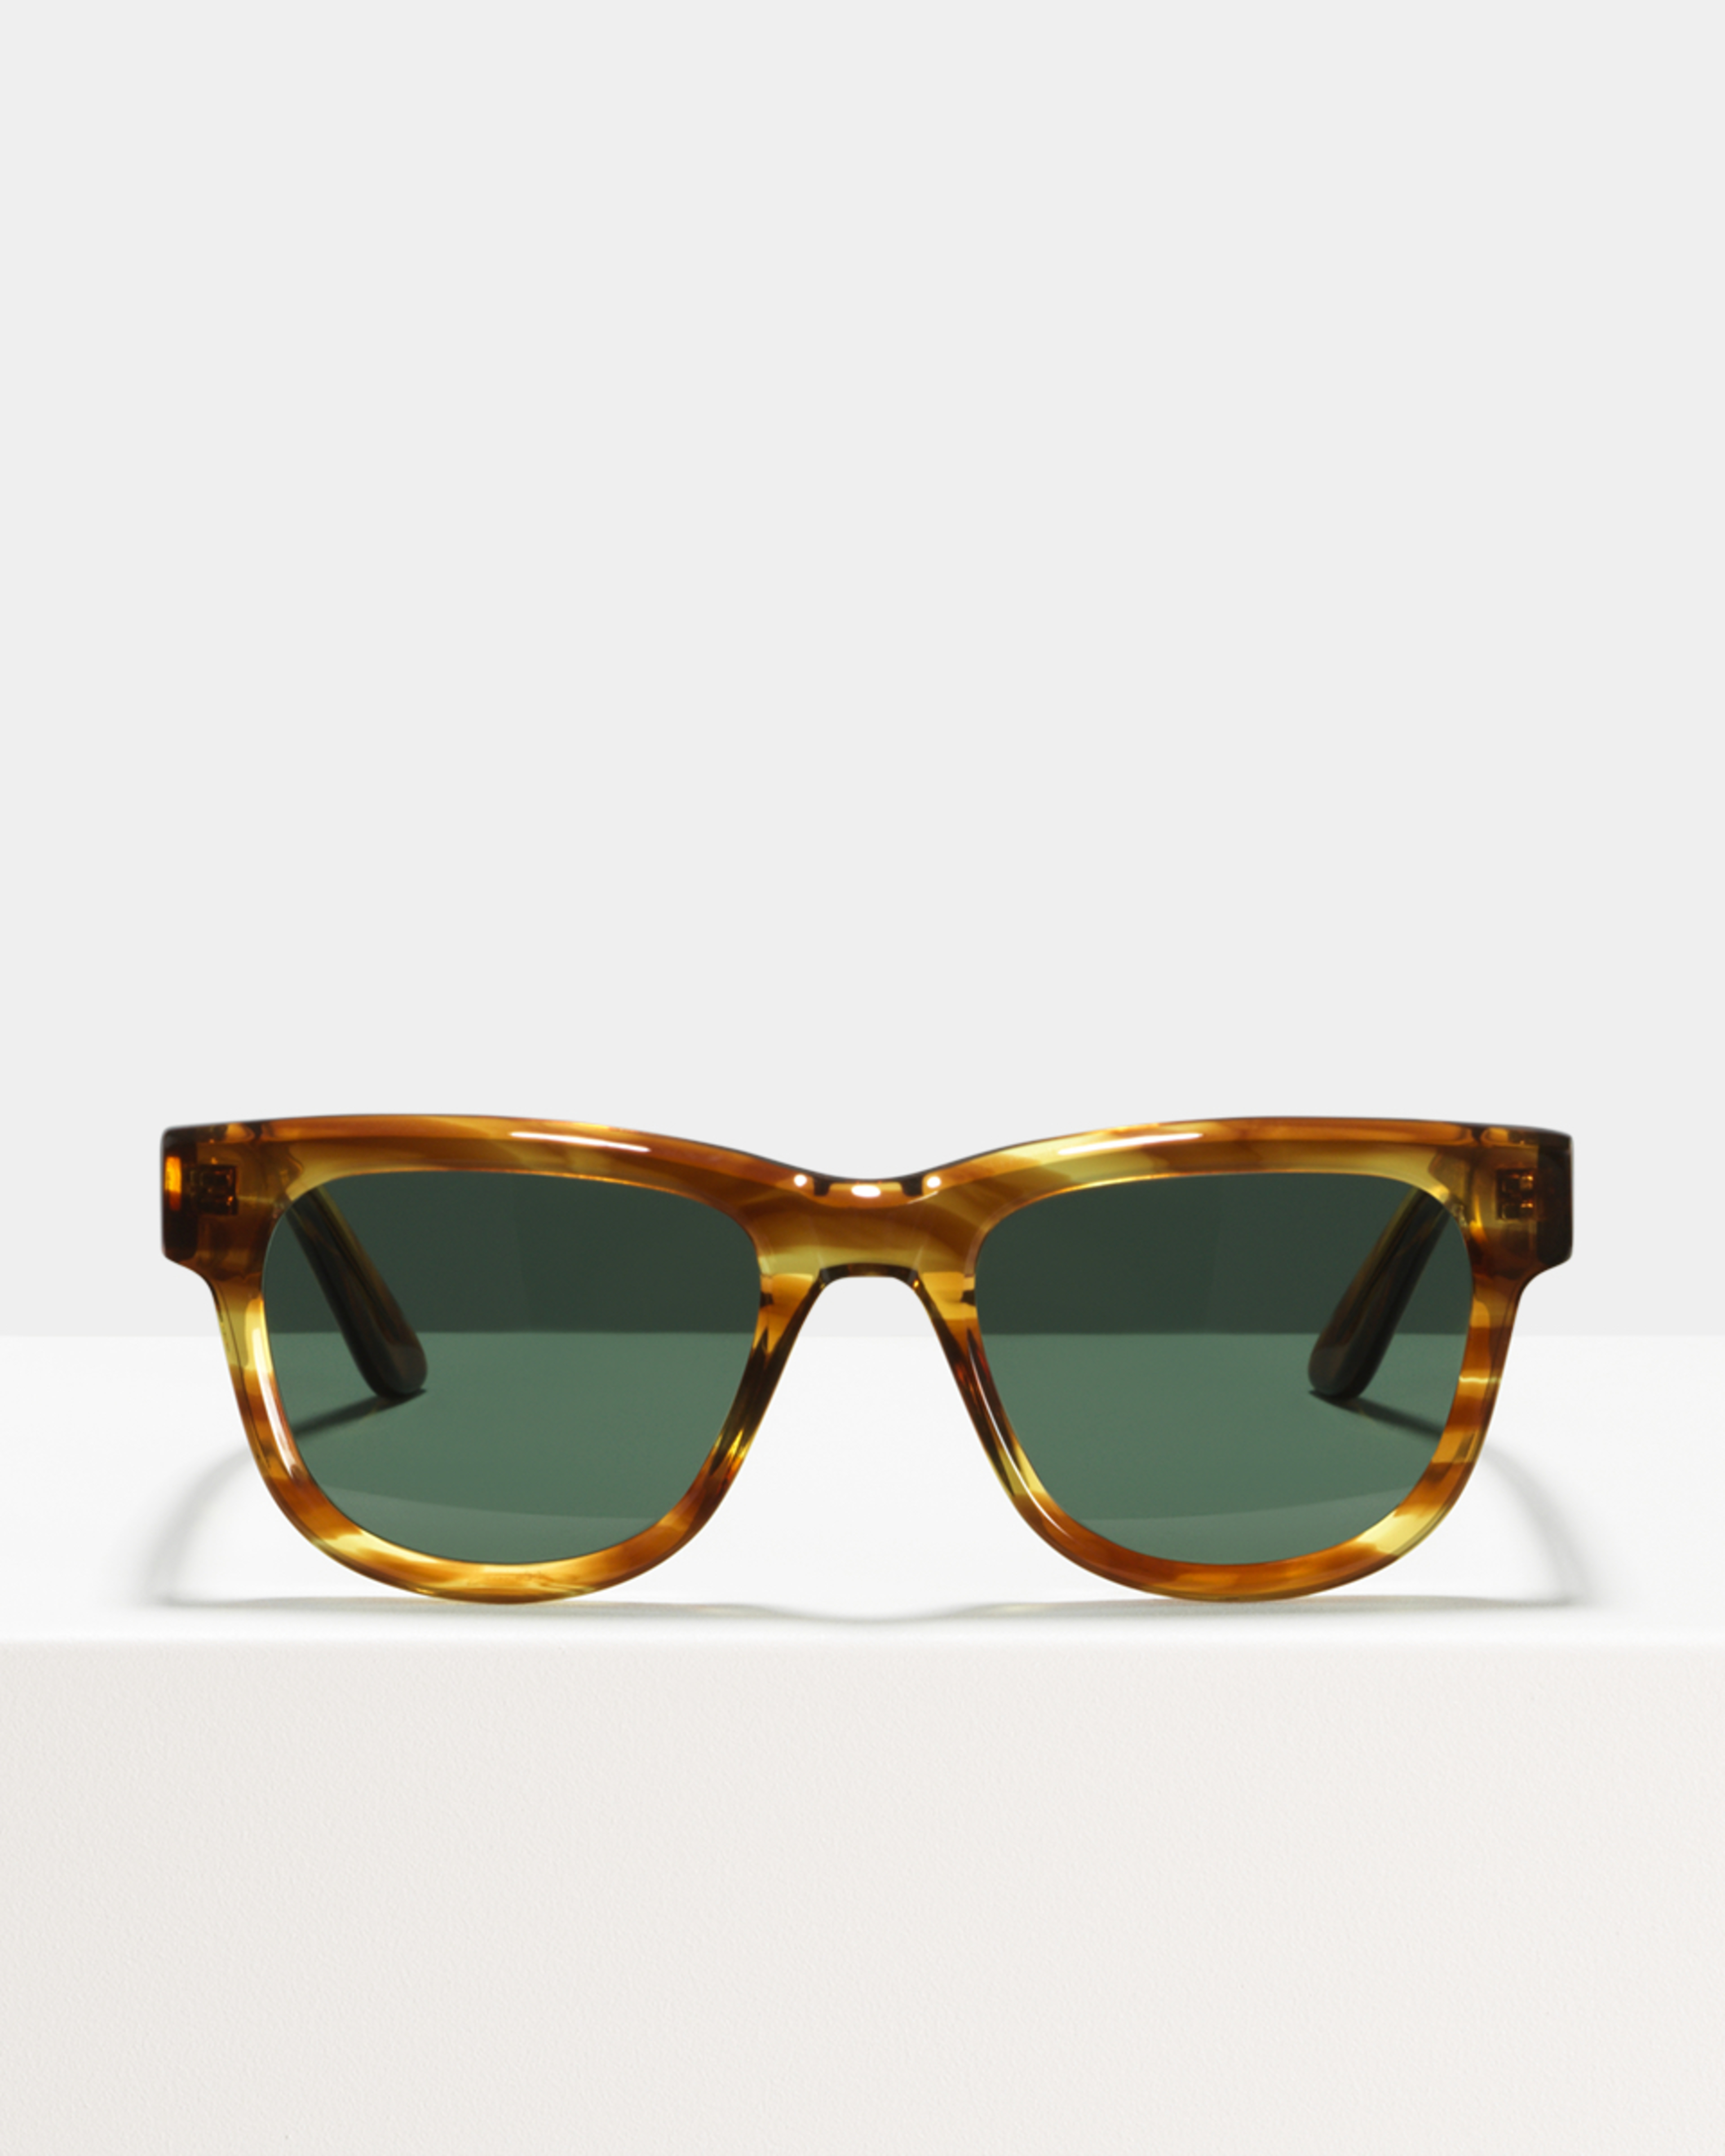 Ace & Tate Sunglasses | rechteckig Acetat in Braun, Orange